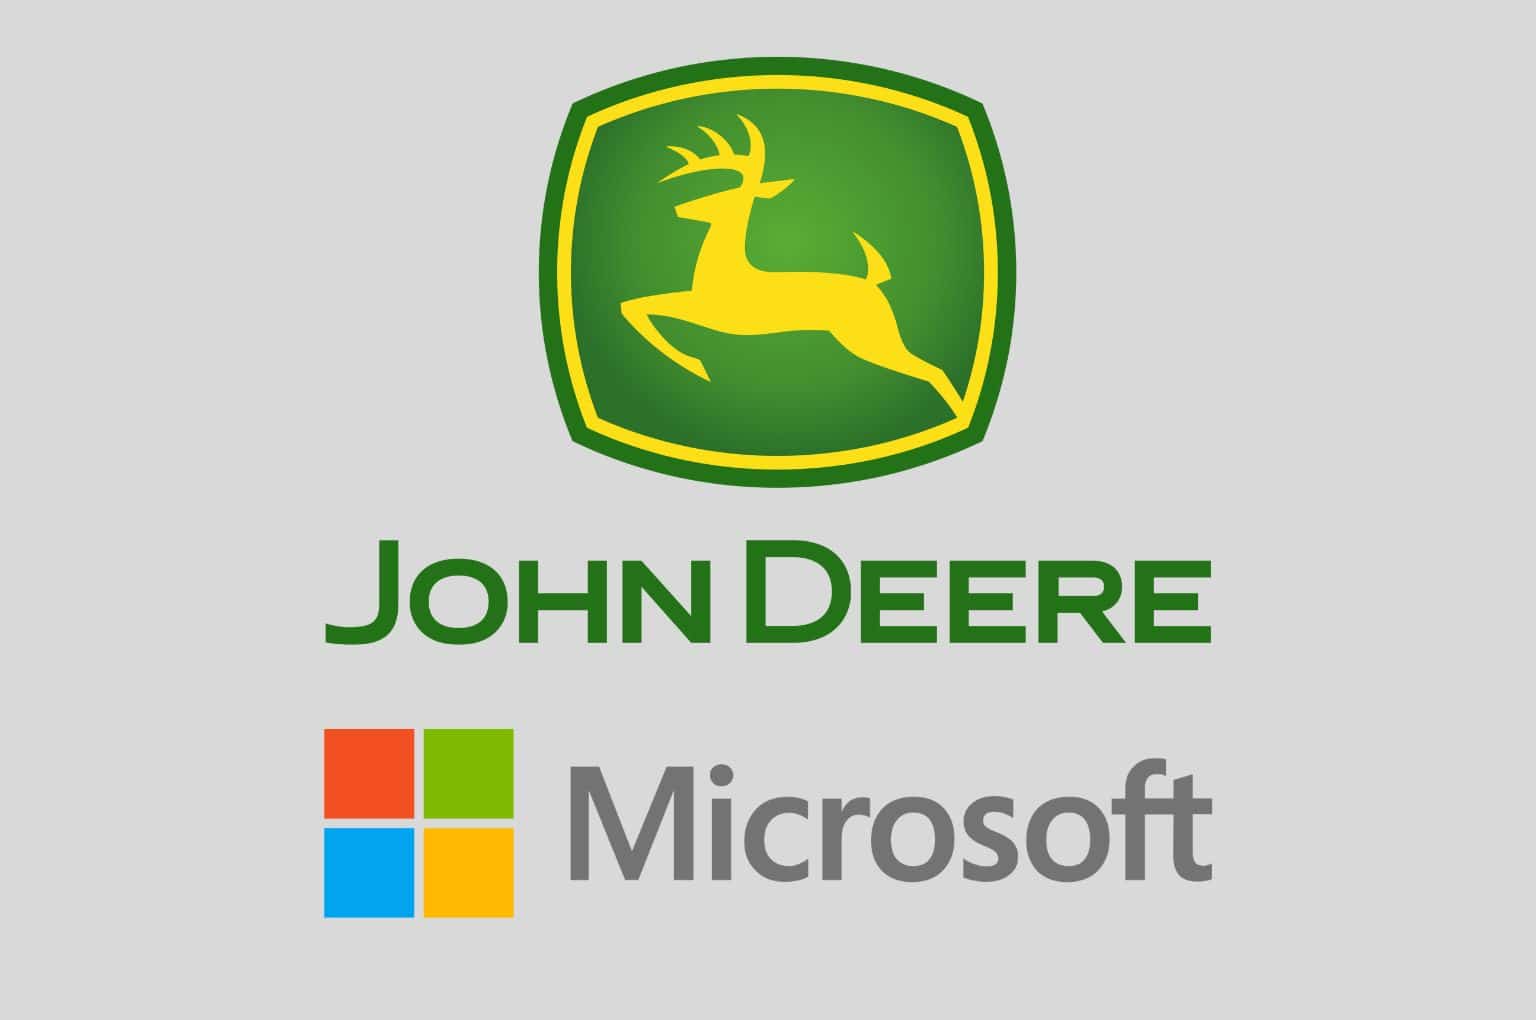 John Deere collaborates with Microsoft